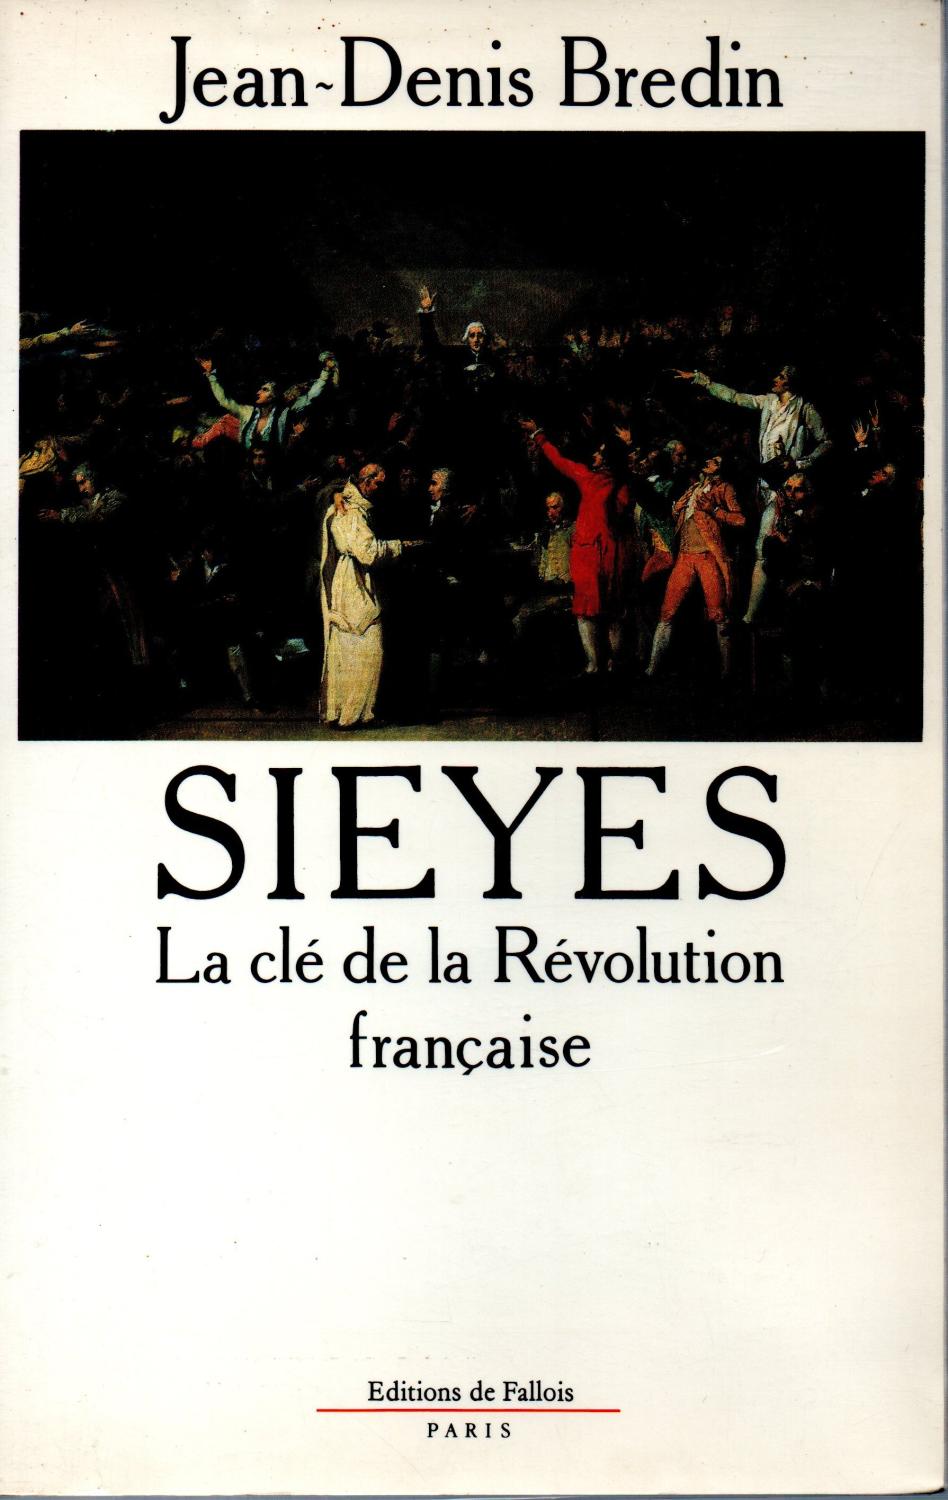 Sieyes,la cle de la revolution francaise - Jean-denis Bredin